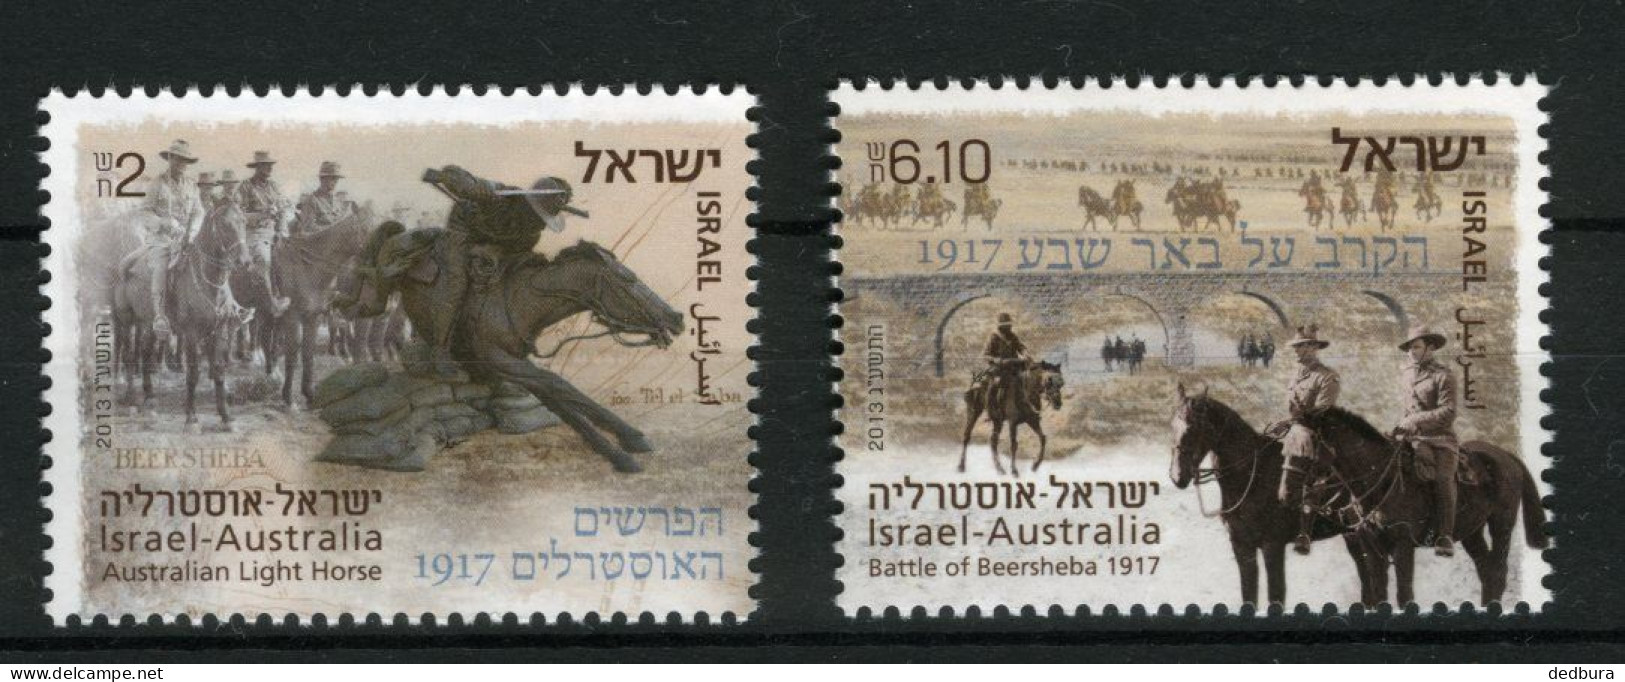 Australia-Israel Joint Issue 2013 - Battle Of Beersheba, 2 Complete Stamp Sets. Israel Stamps Without Tabs - Ongebruikt (zonder Tabs)